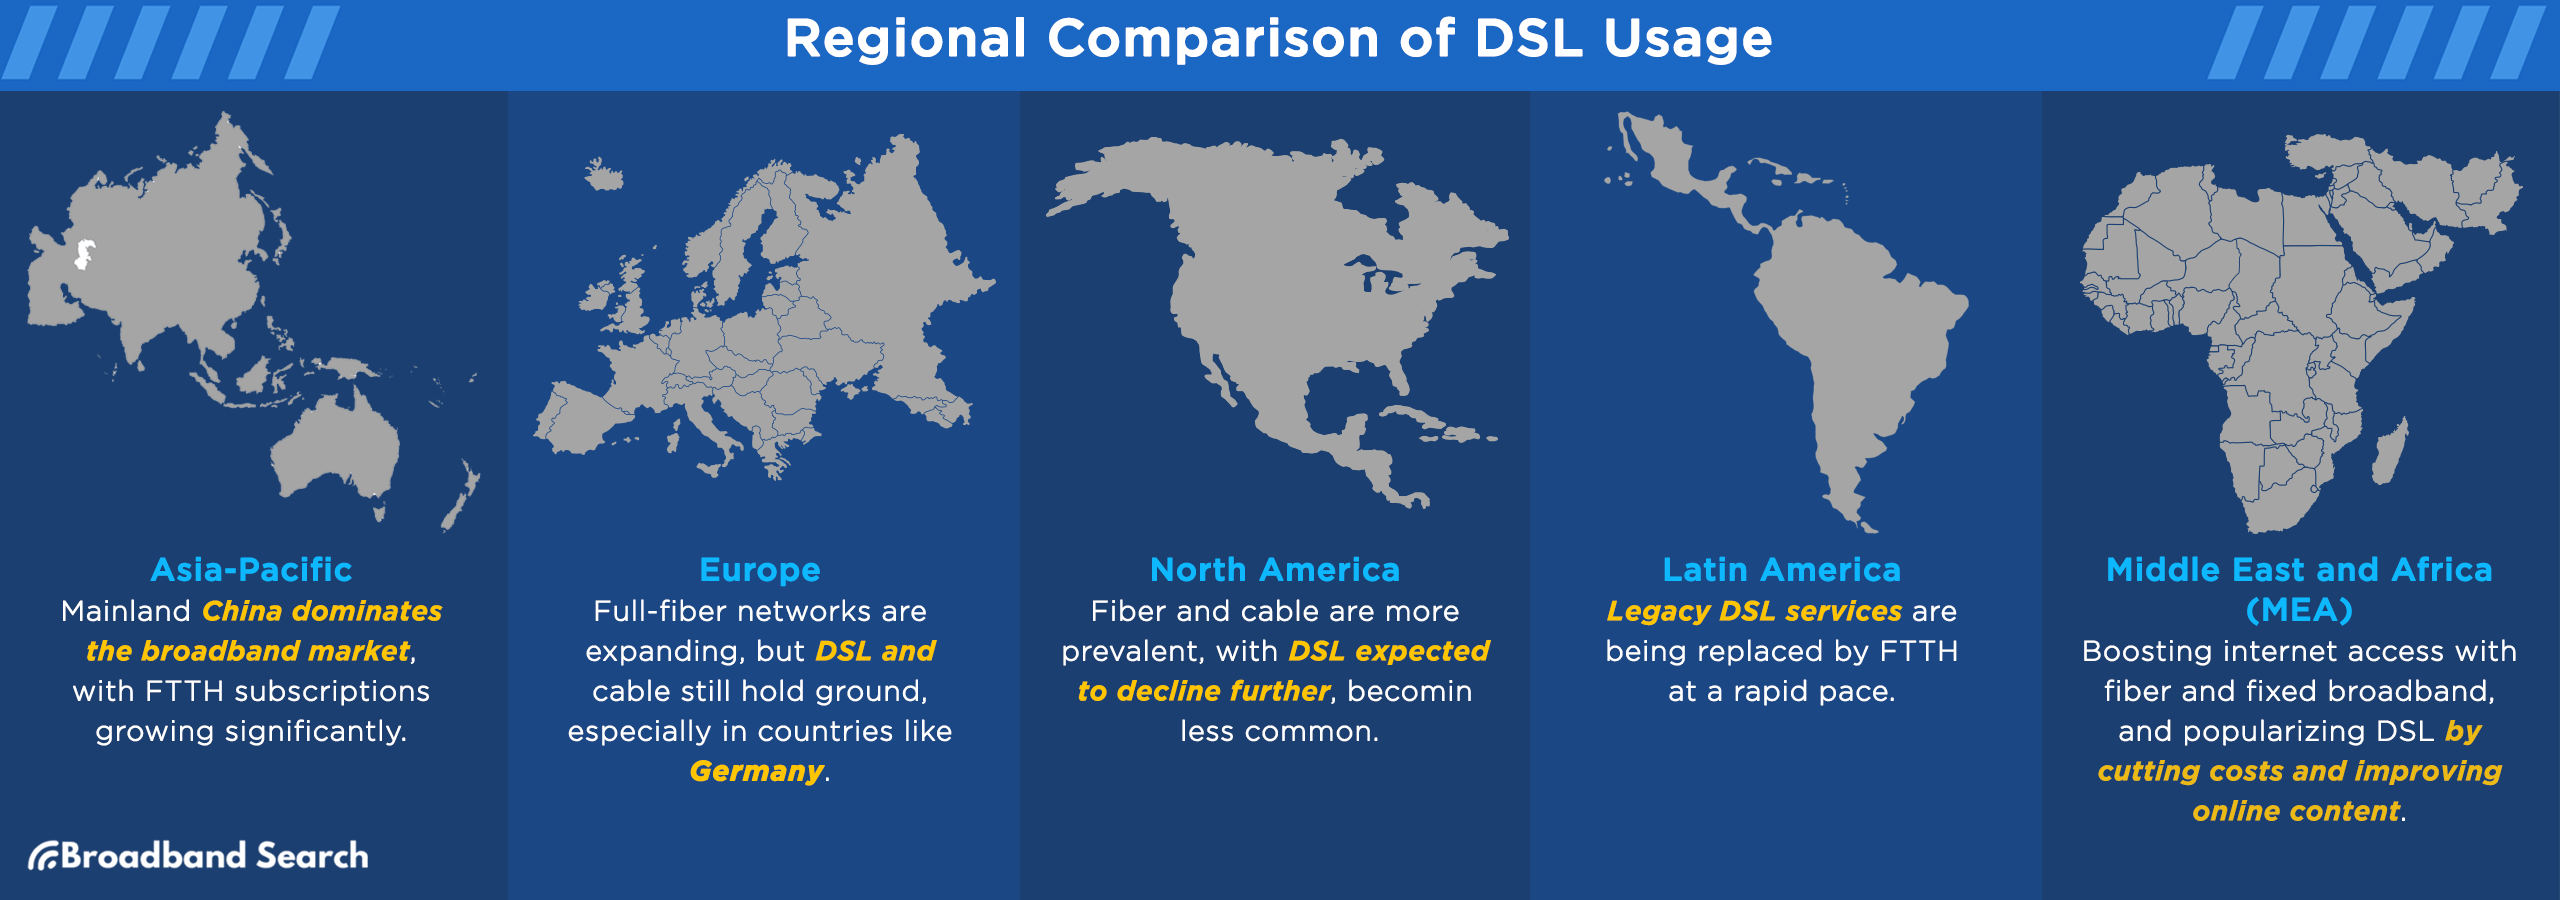 Regional comparison of DSL usage